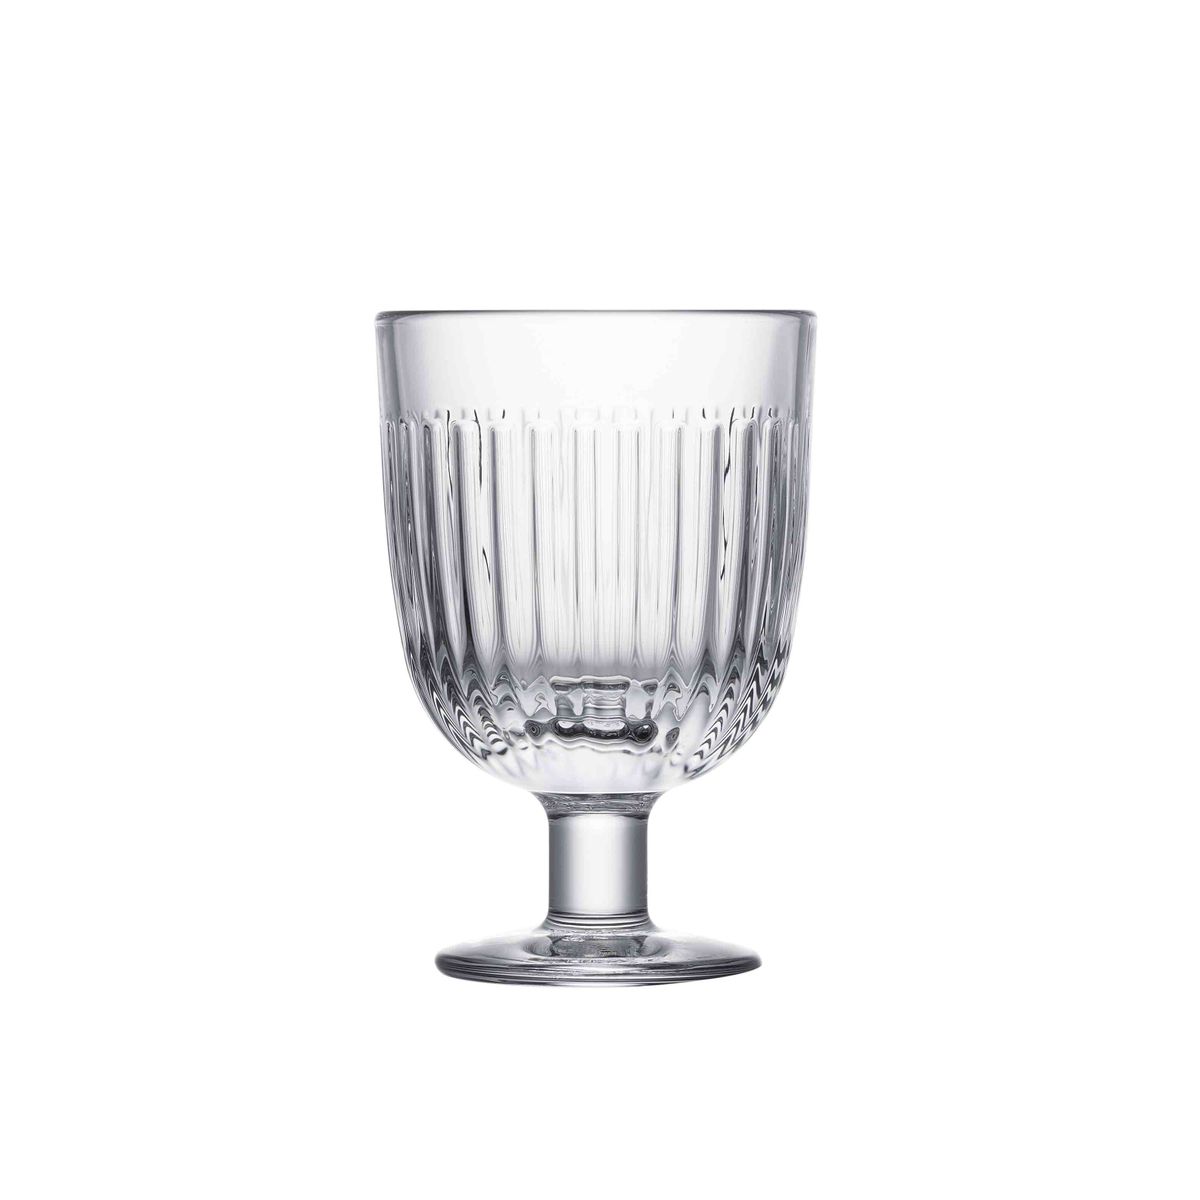 Lot de 6 verres à eau Périgord 22cl en verre transparent - La